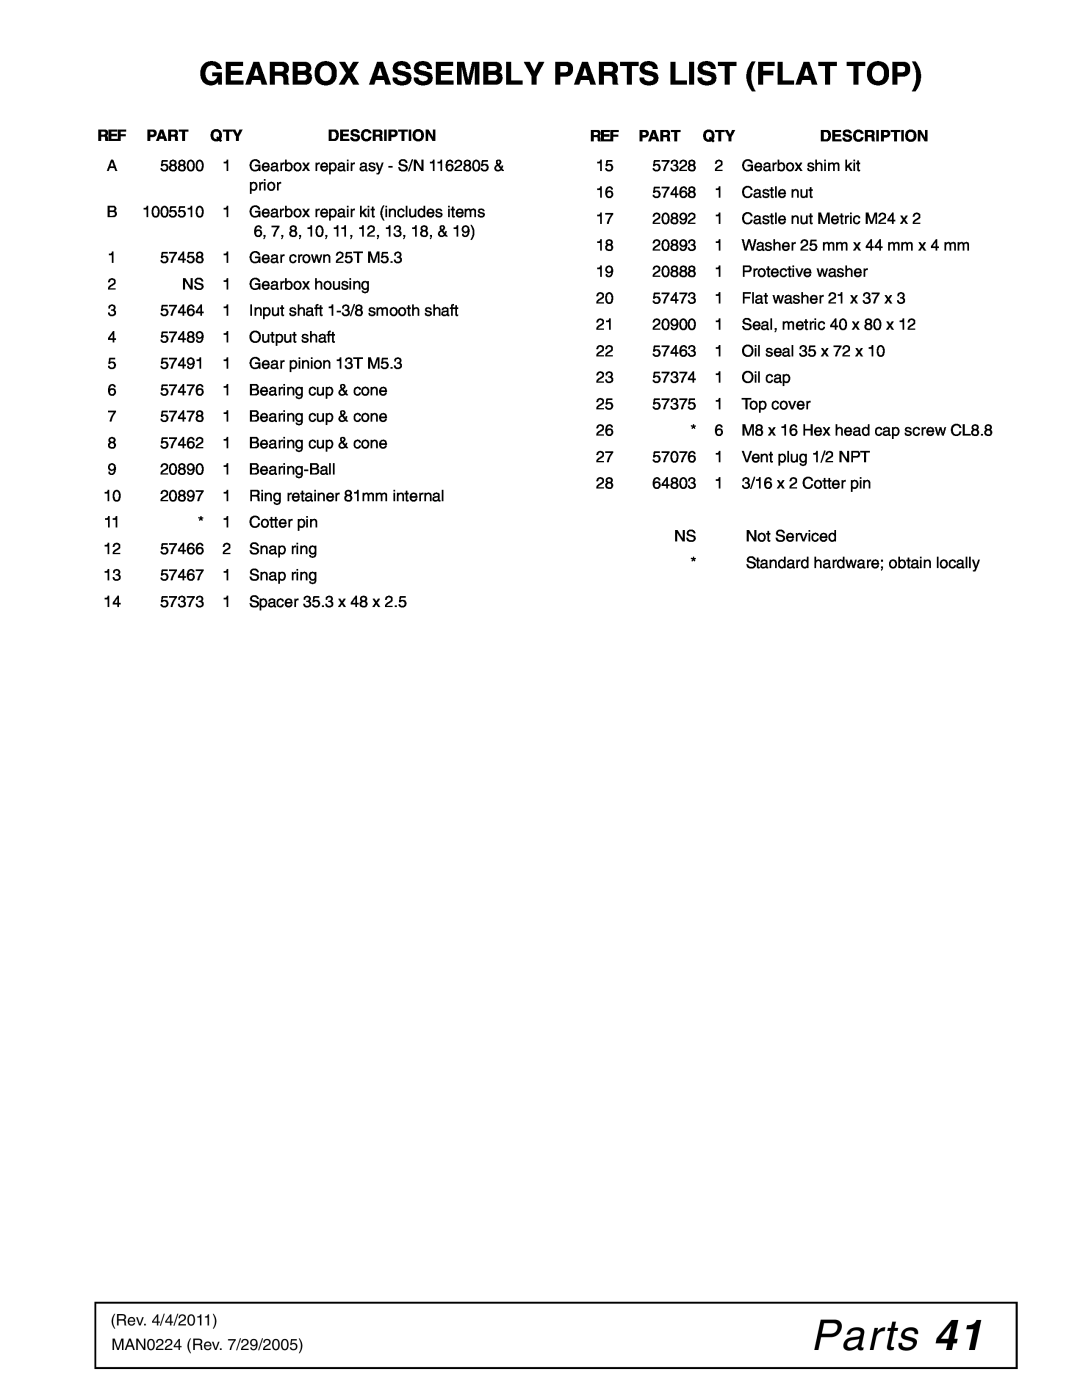 Woods Equipment RCC42 manual Gearbox Assembly Parts List Flat Top, Description, Ref Part Qty 